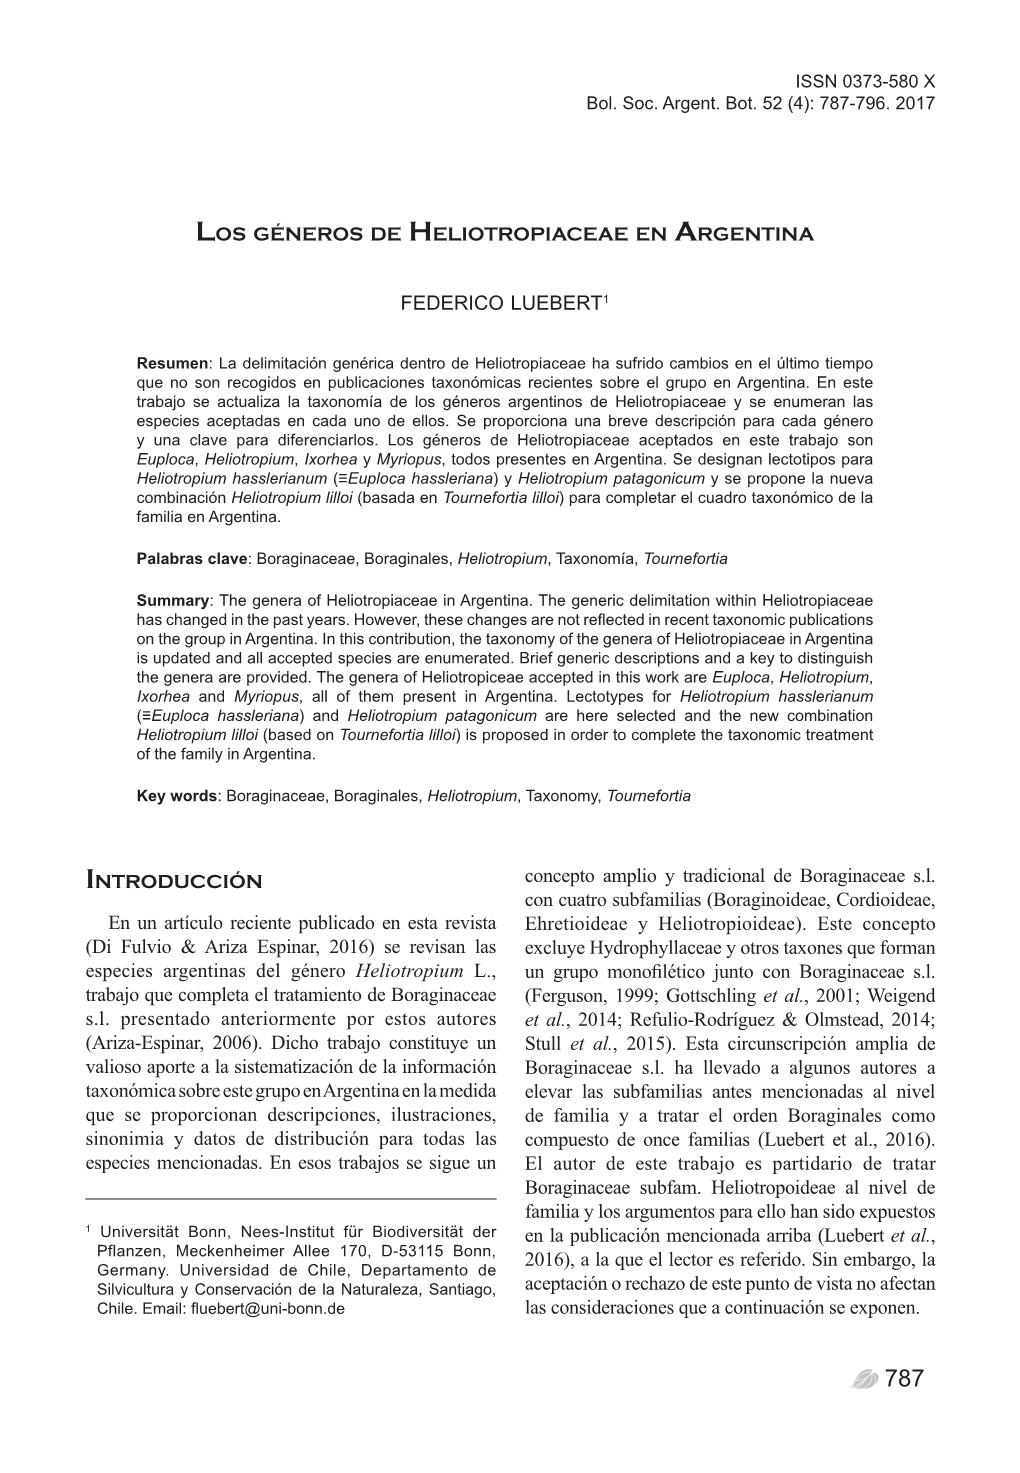 F. Luebert - Los Géneros De Heliotropiaceaeissn En Argentina0373-580 X Bol